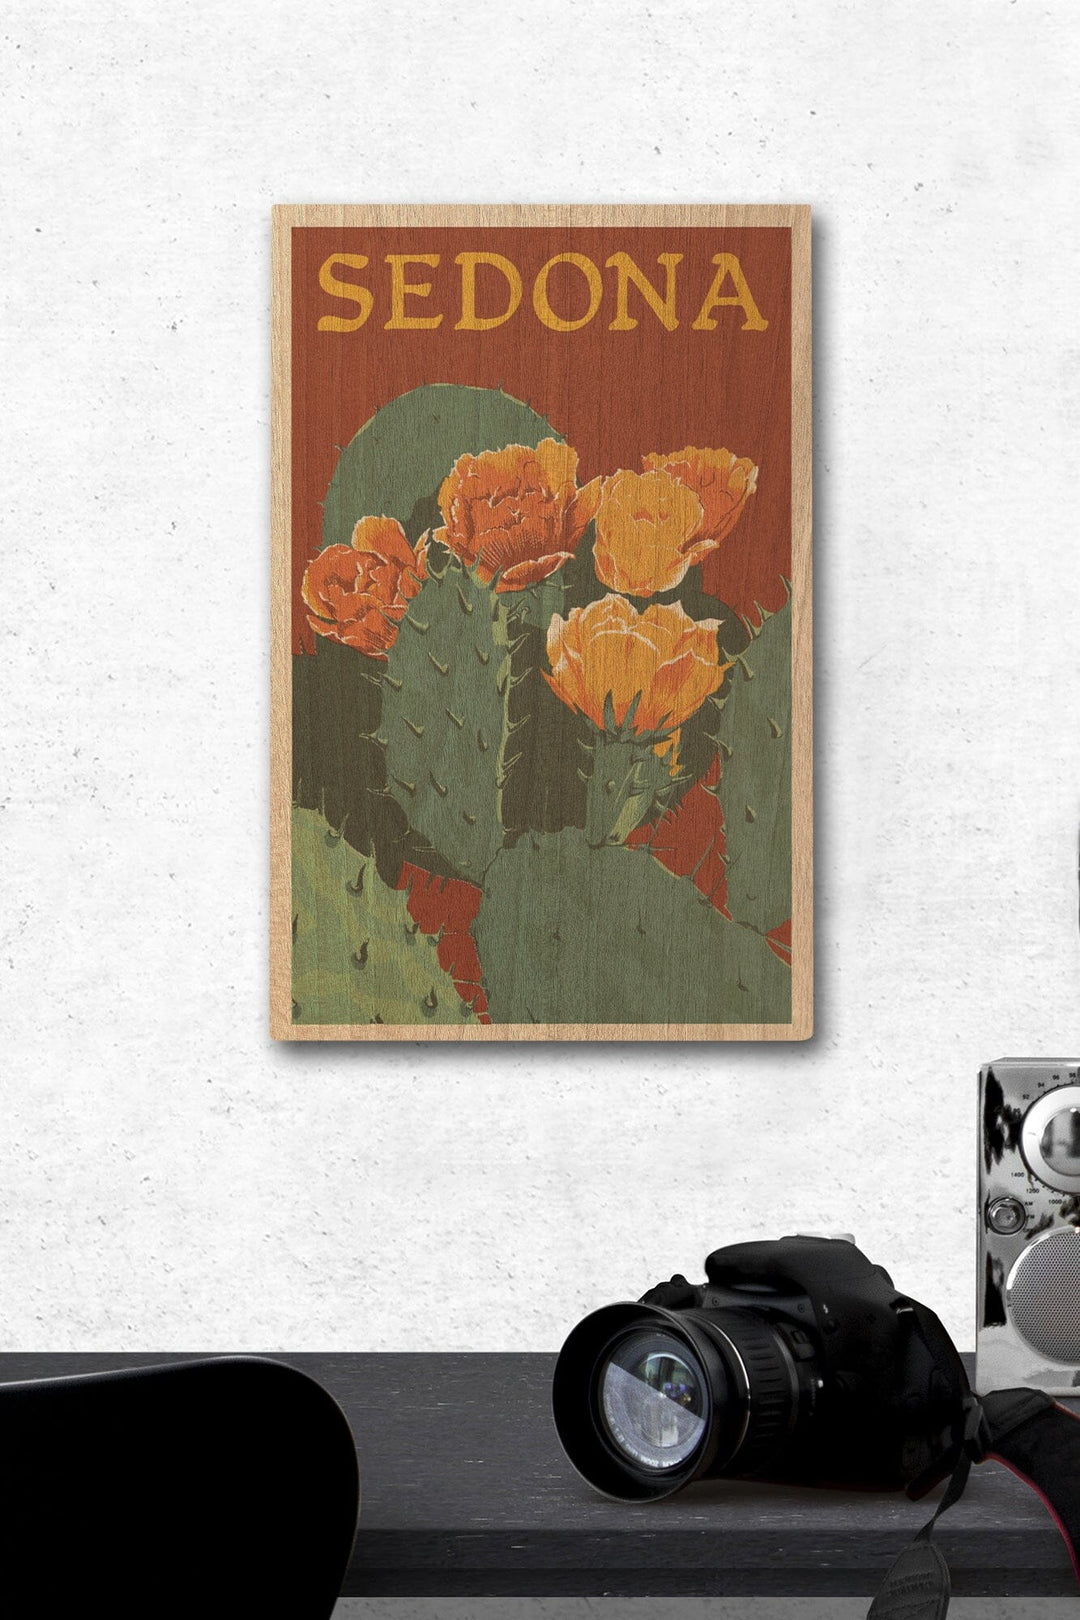 Sedona, Arizona, Prickly Pear Cactus, Letterpress, Lantern Press Artwork, Wood Signs and Postcards Wood Lantern Press 12 x 18 Wood Gallery Print 